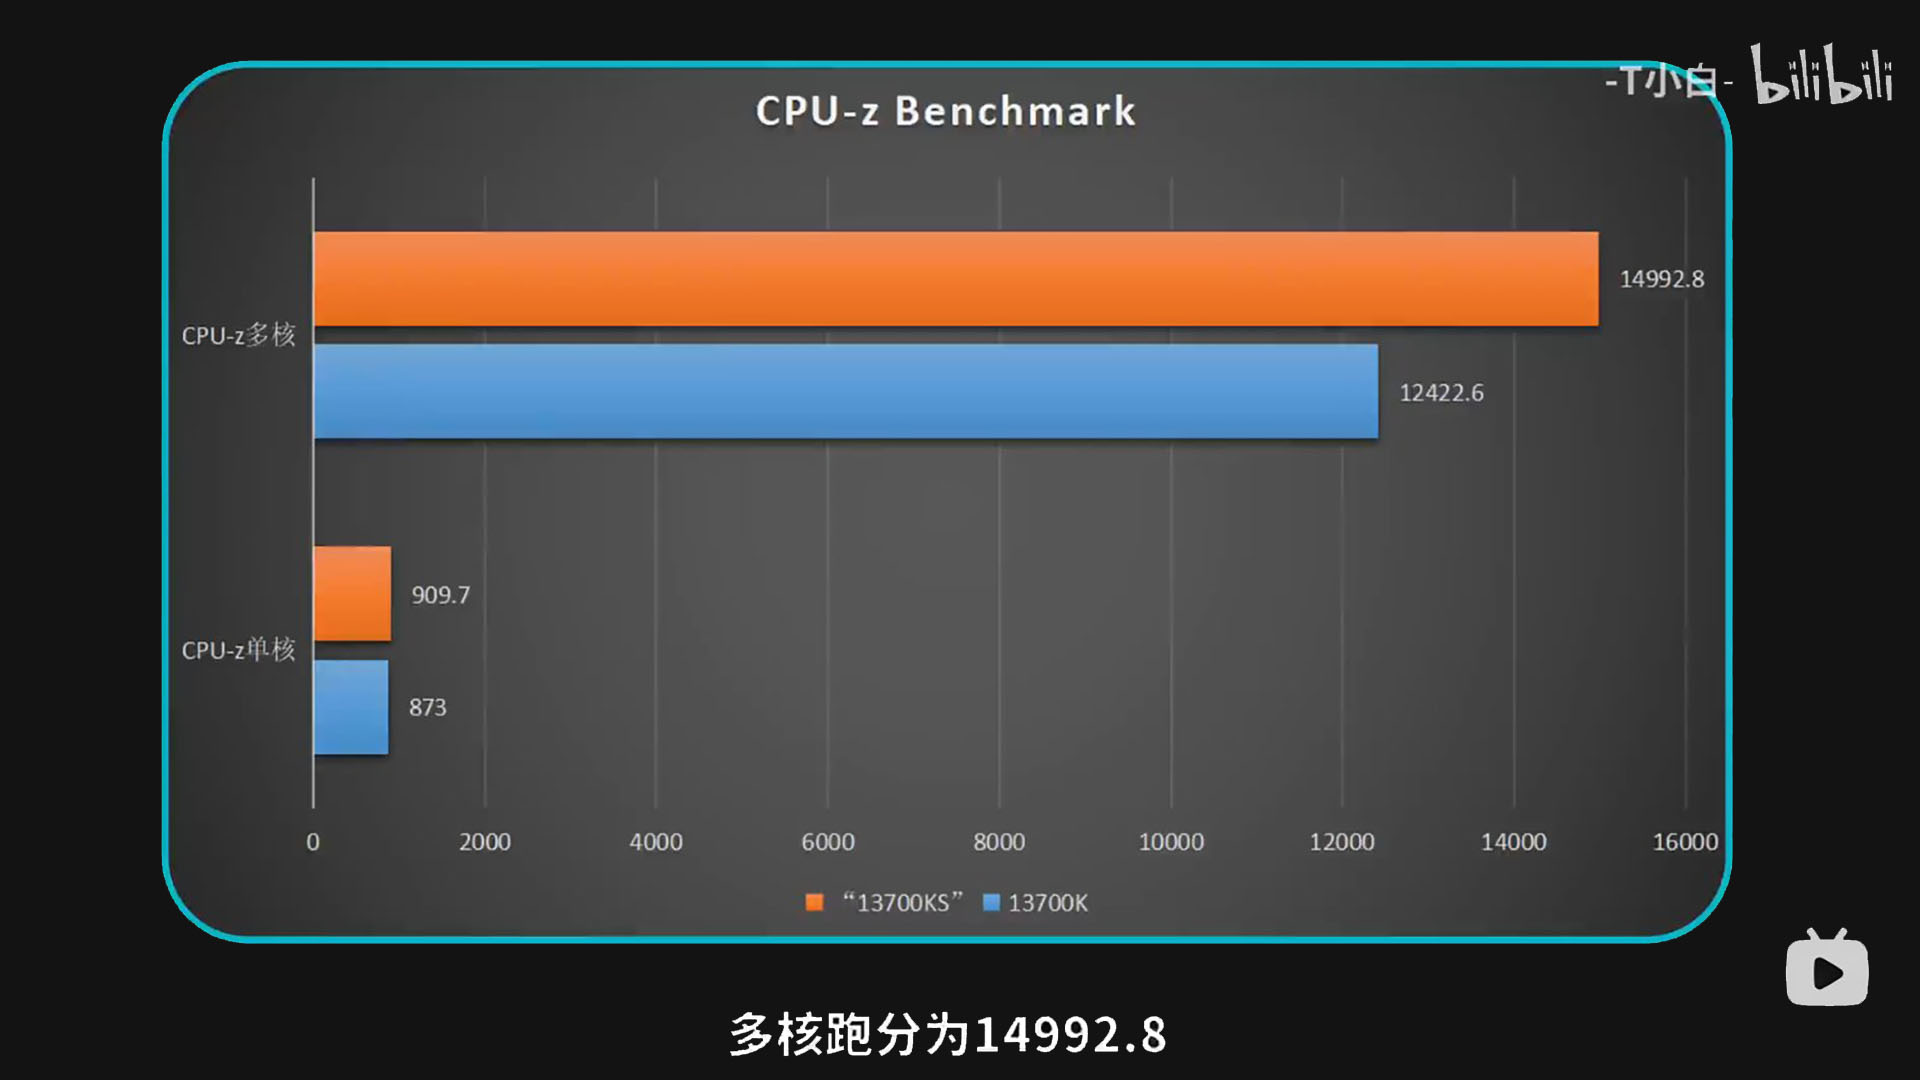 Raptor Lake Refresh: Core i7-14700K has 20 cores, benchmarks leak